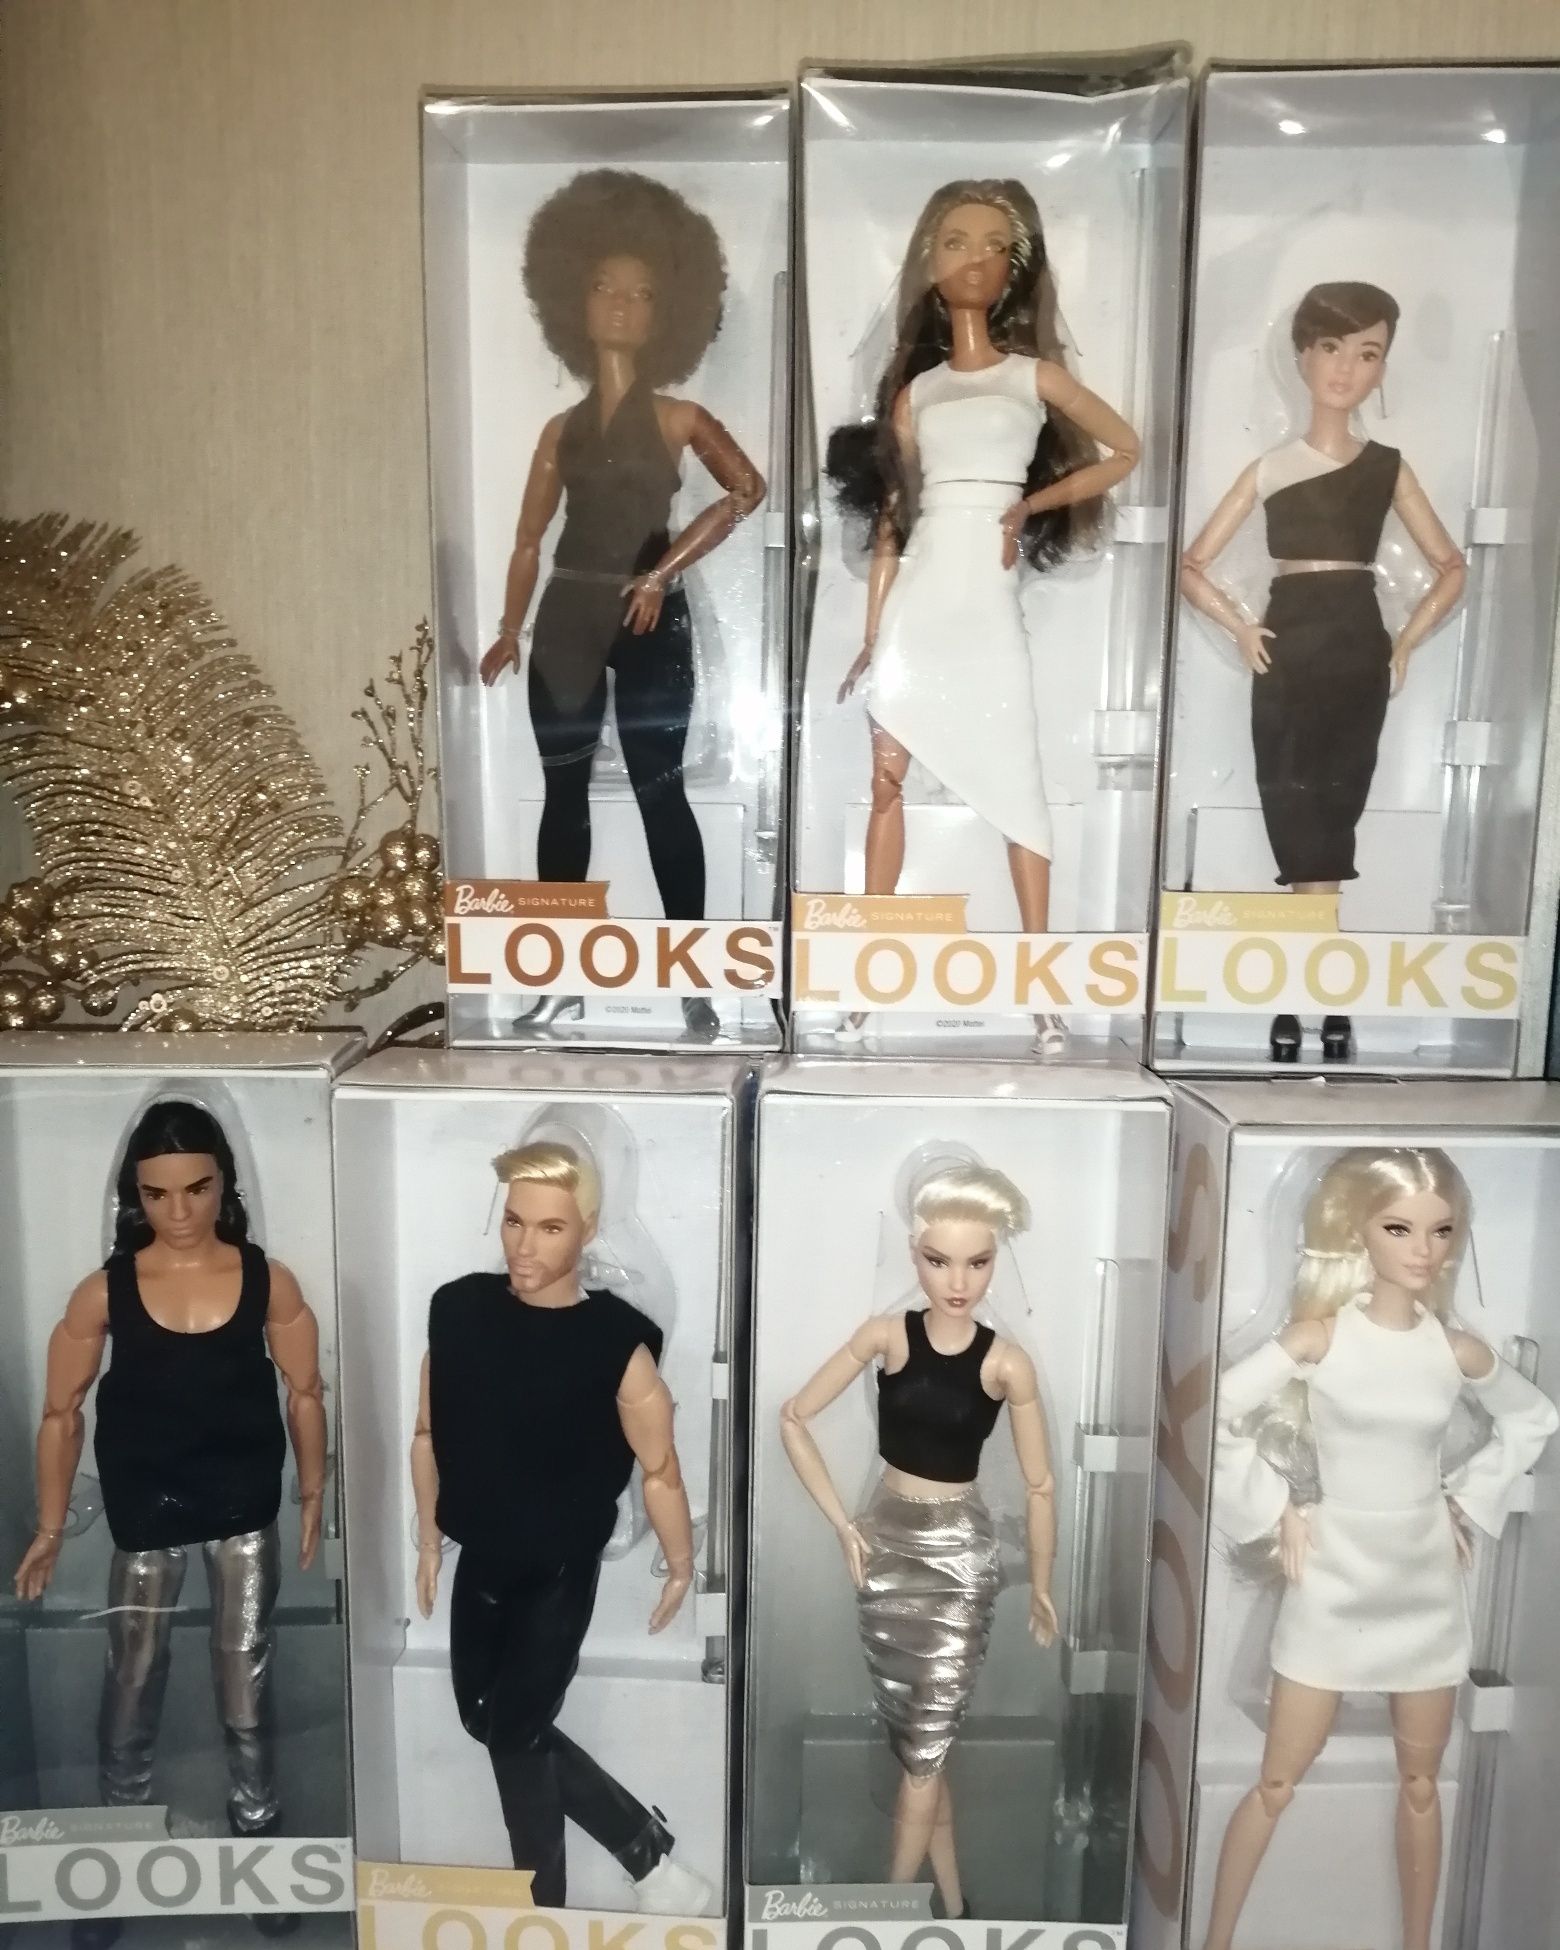 Барби и кен barbie ken  лукс  looks barbie